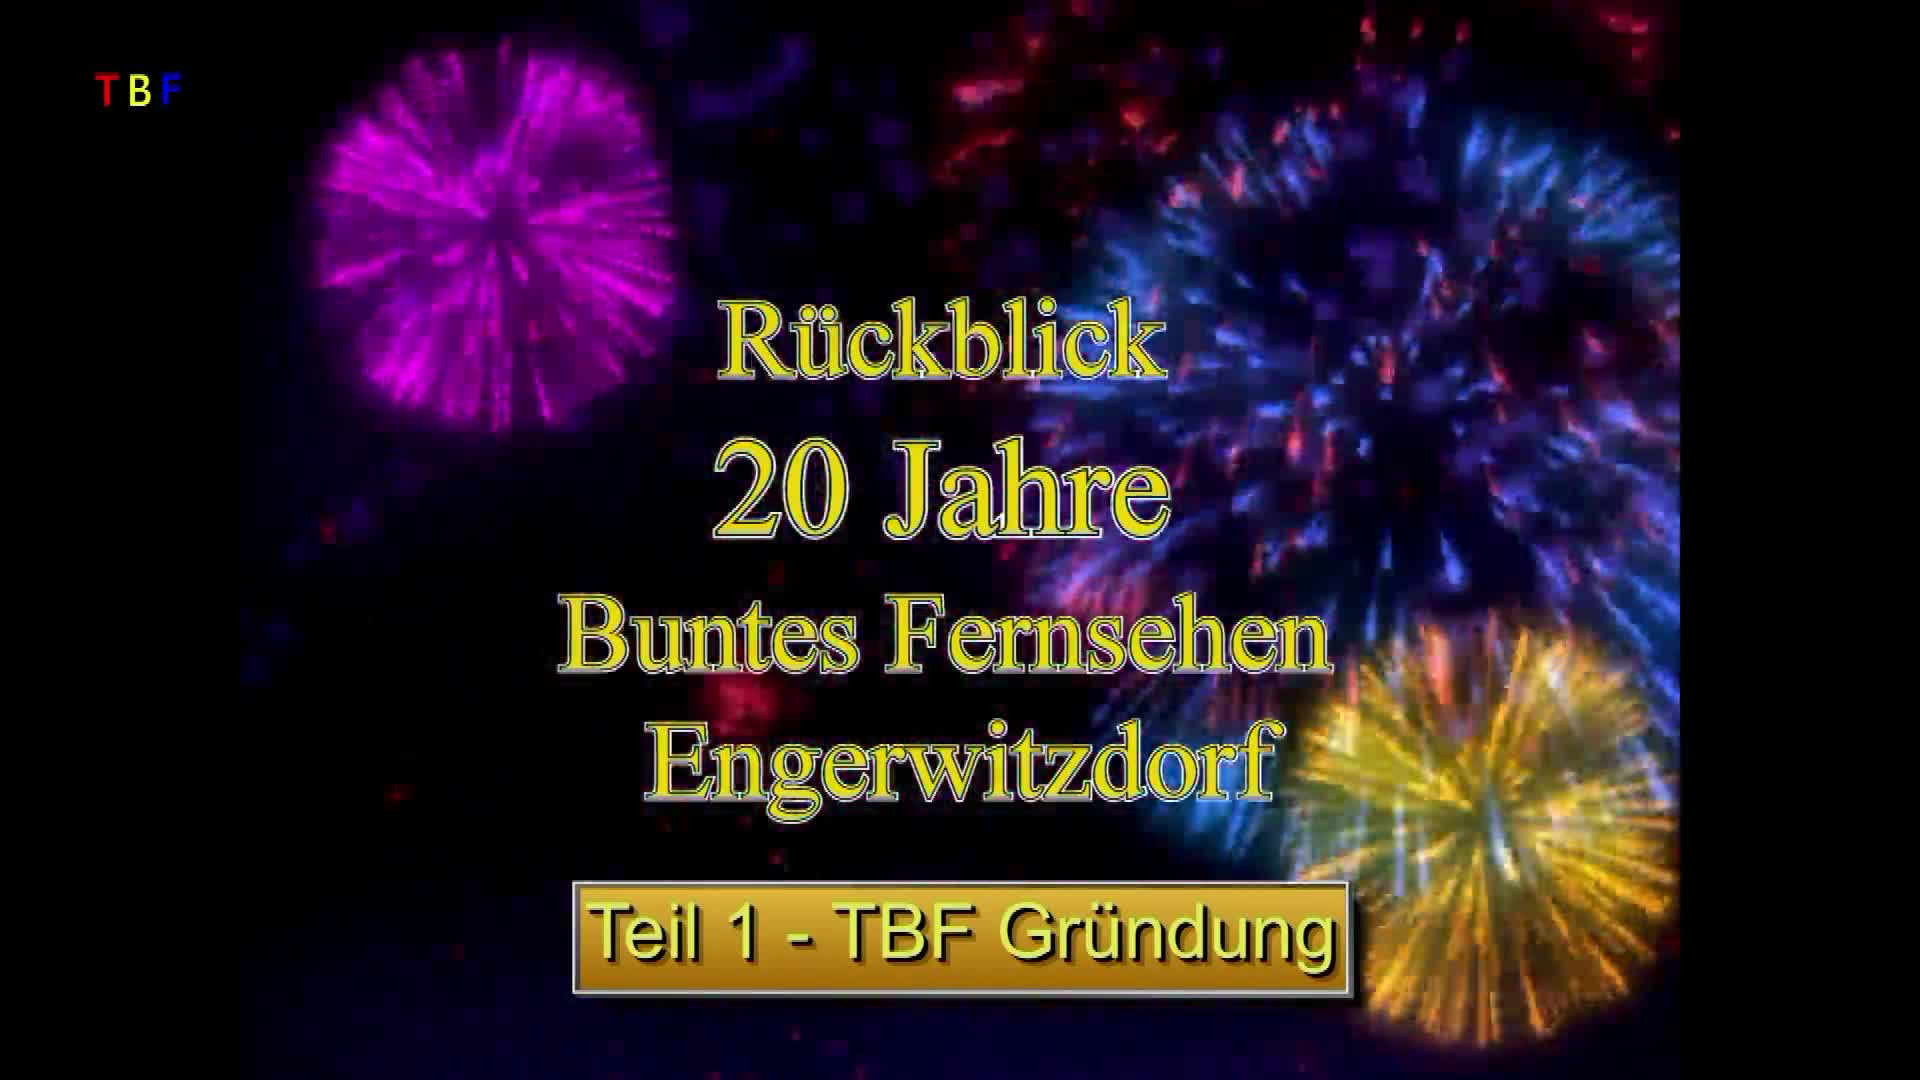 Rückblick-20 Jahre Buntes Fernsehen, Teil 1 TBF Gründung